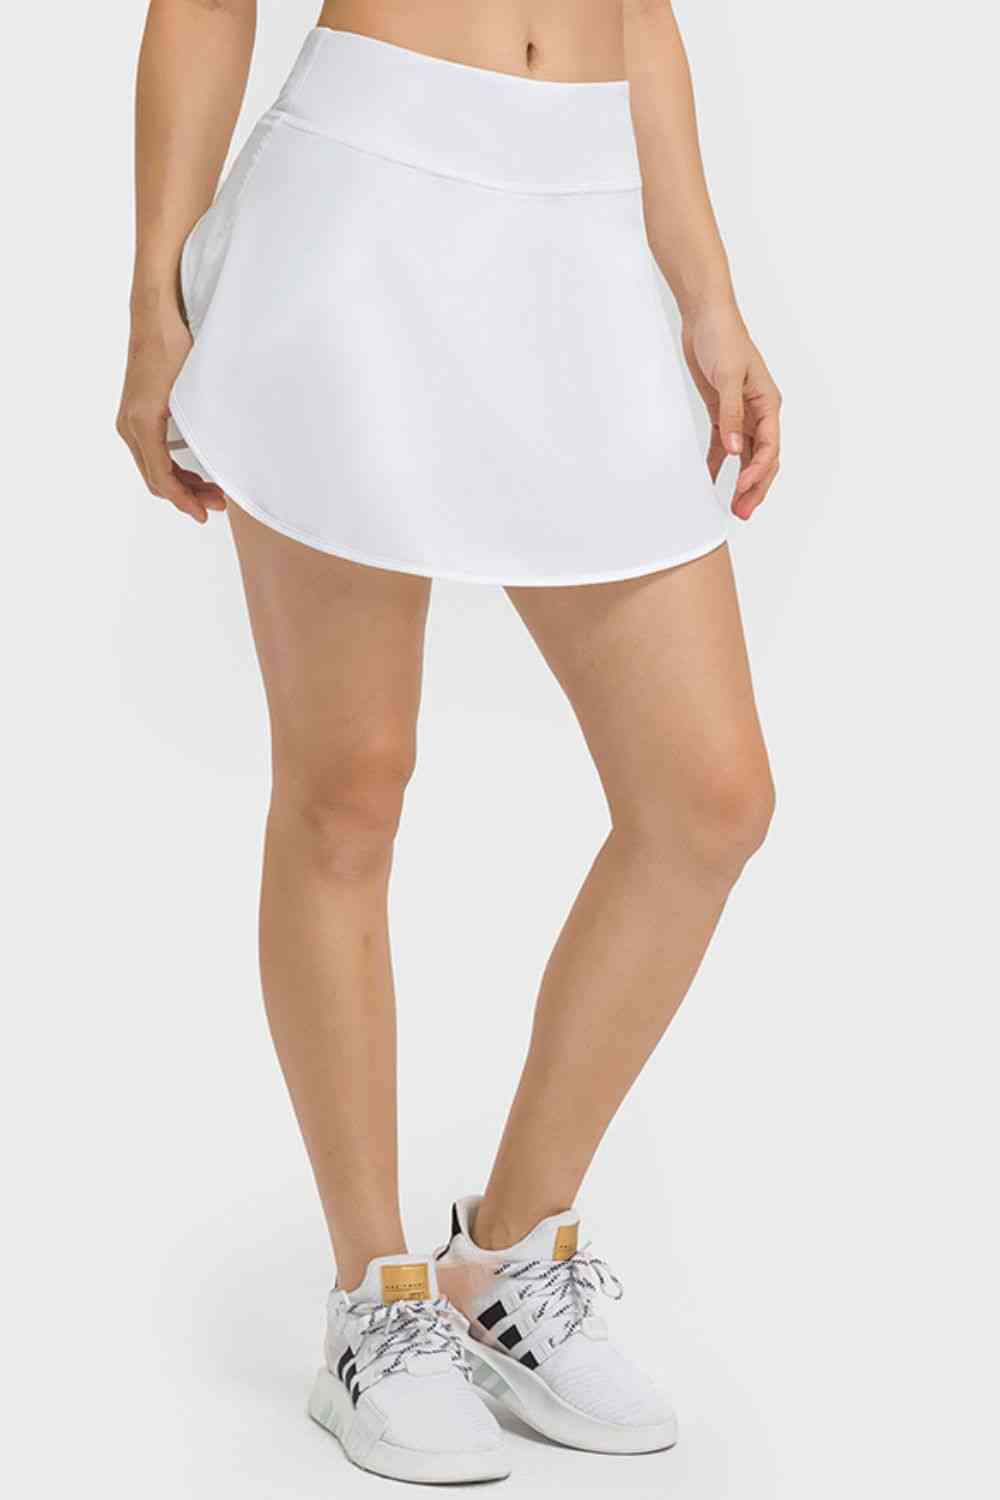 Falda pantalón deportiva con cintura ancha